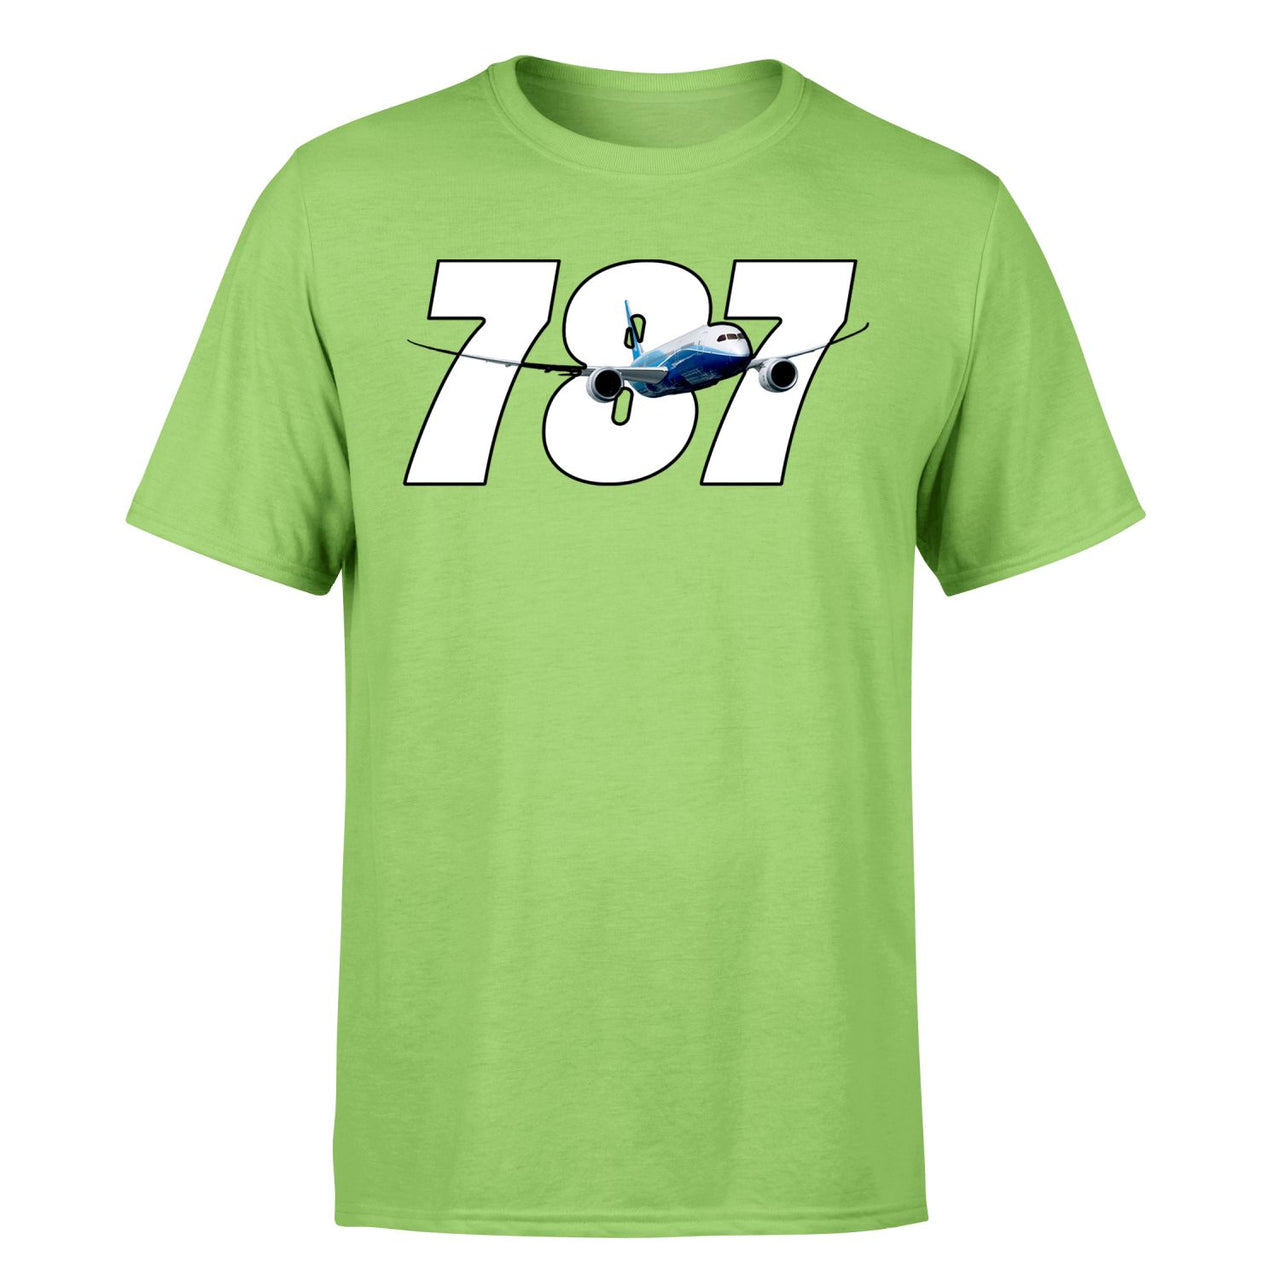 Super Boeing 787 Designed T-Shirts